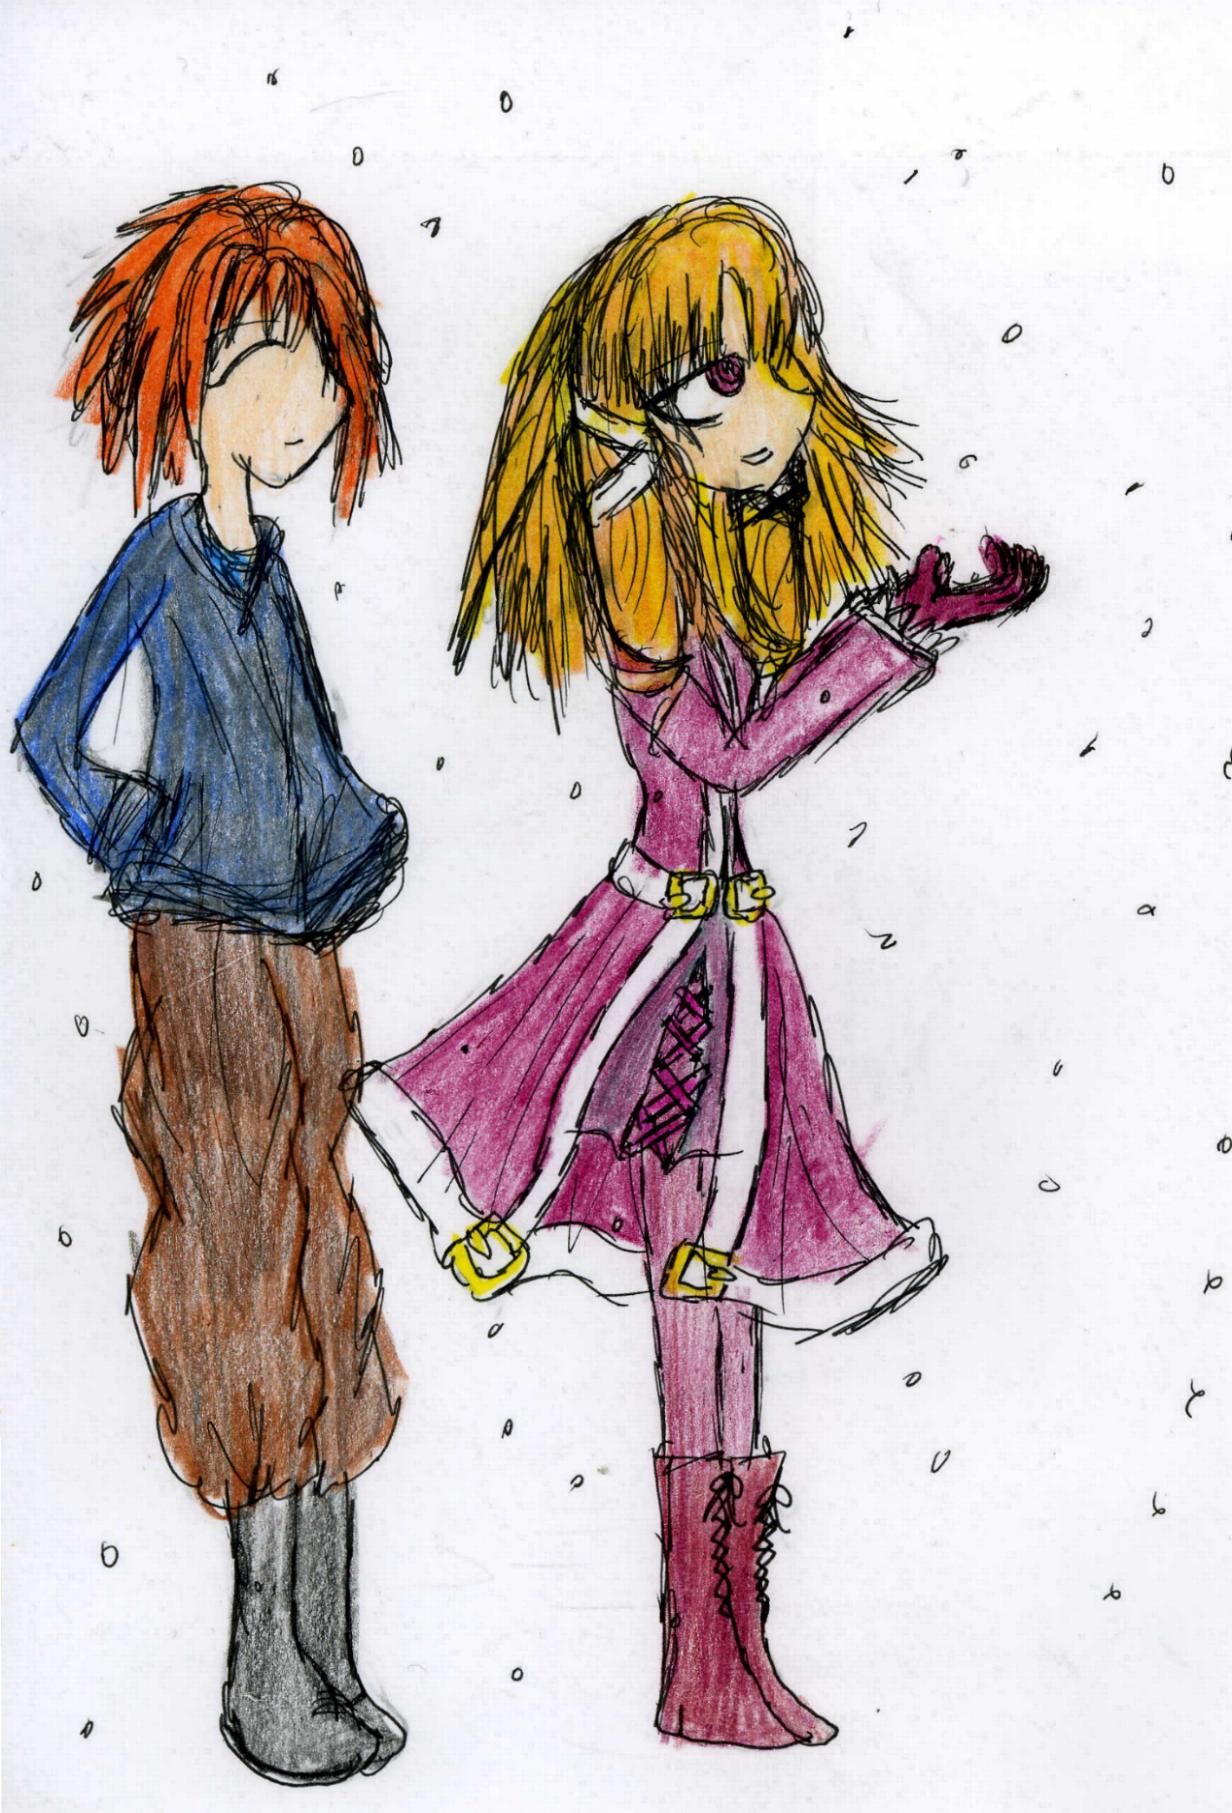 Ari & Marlene in the falling snow by Evil_Summoner